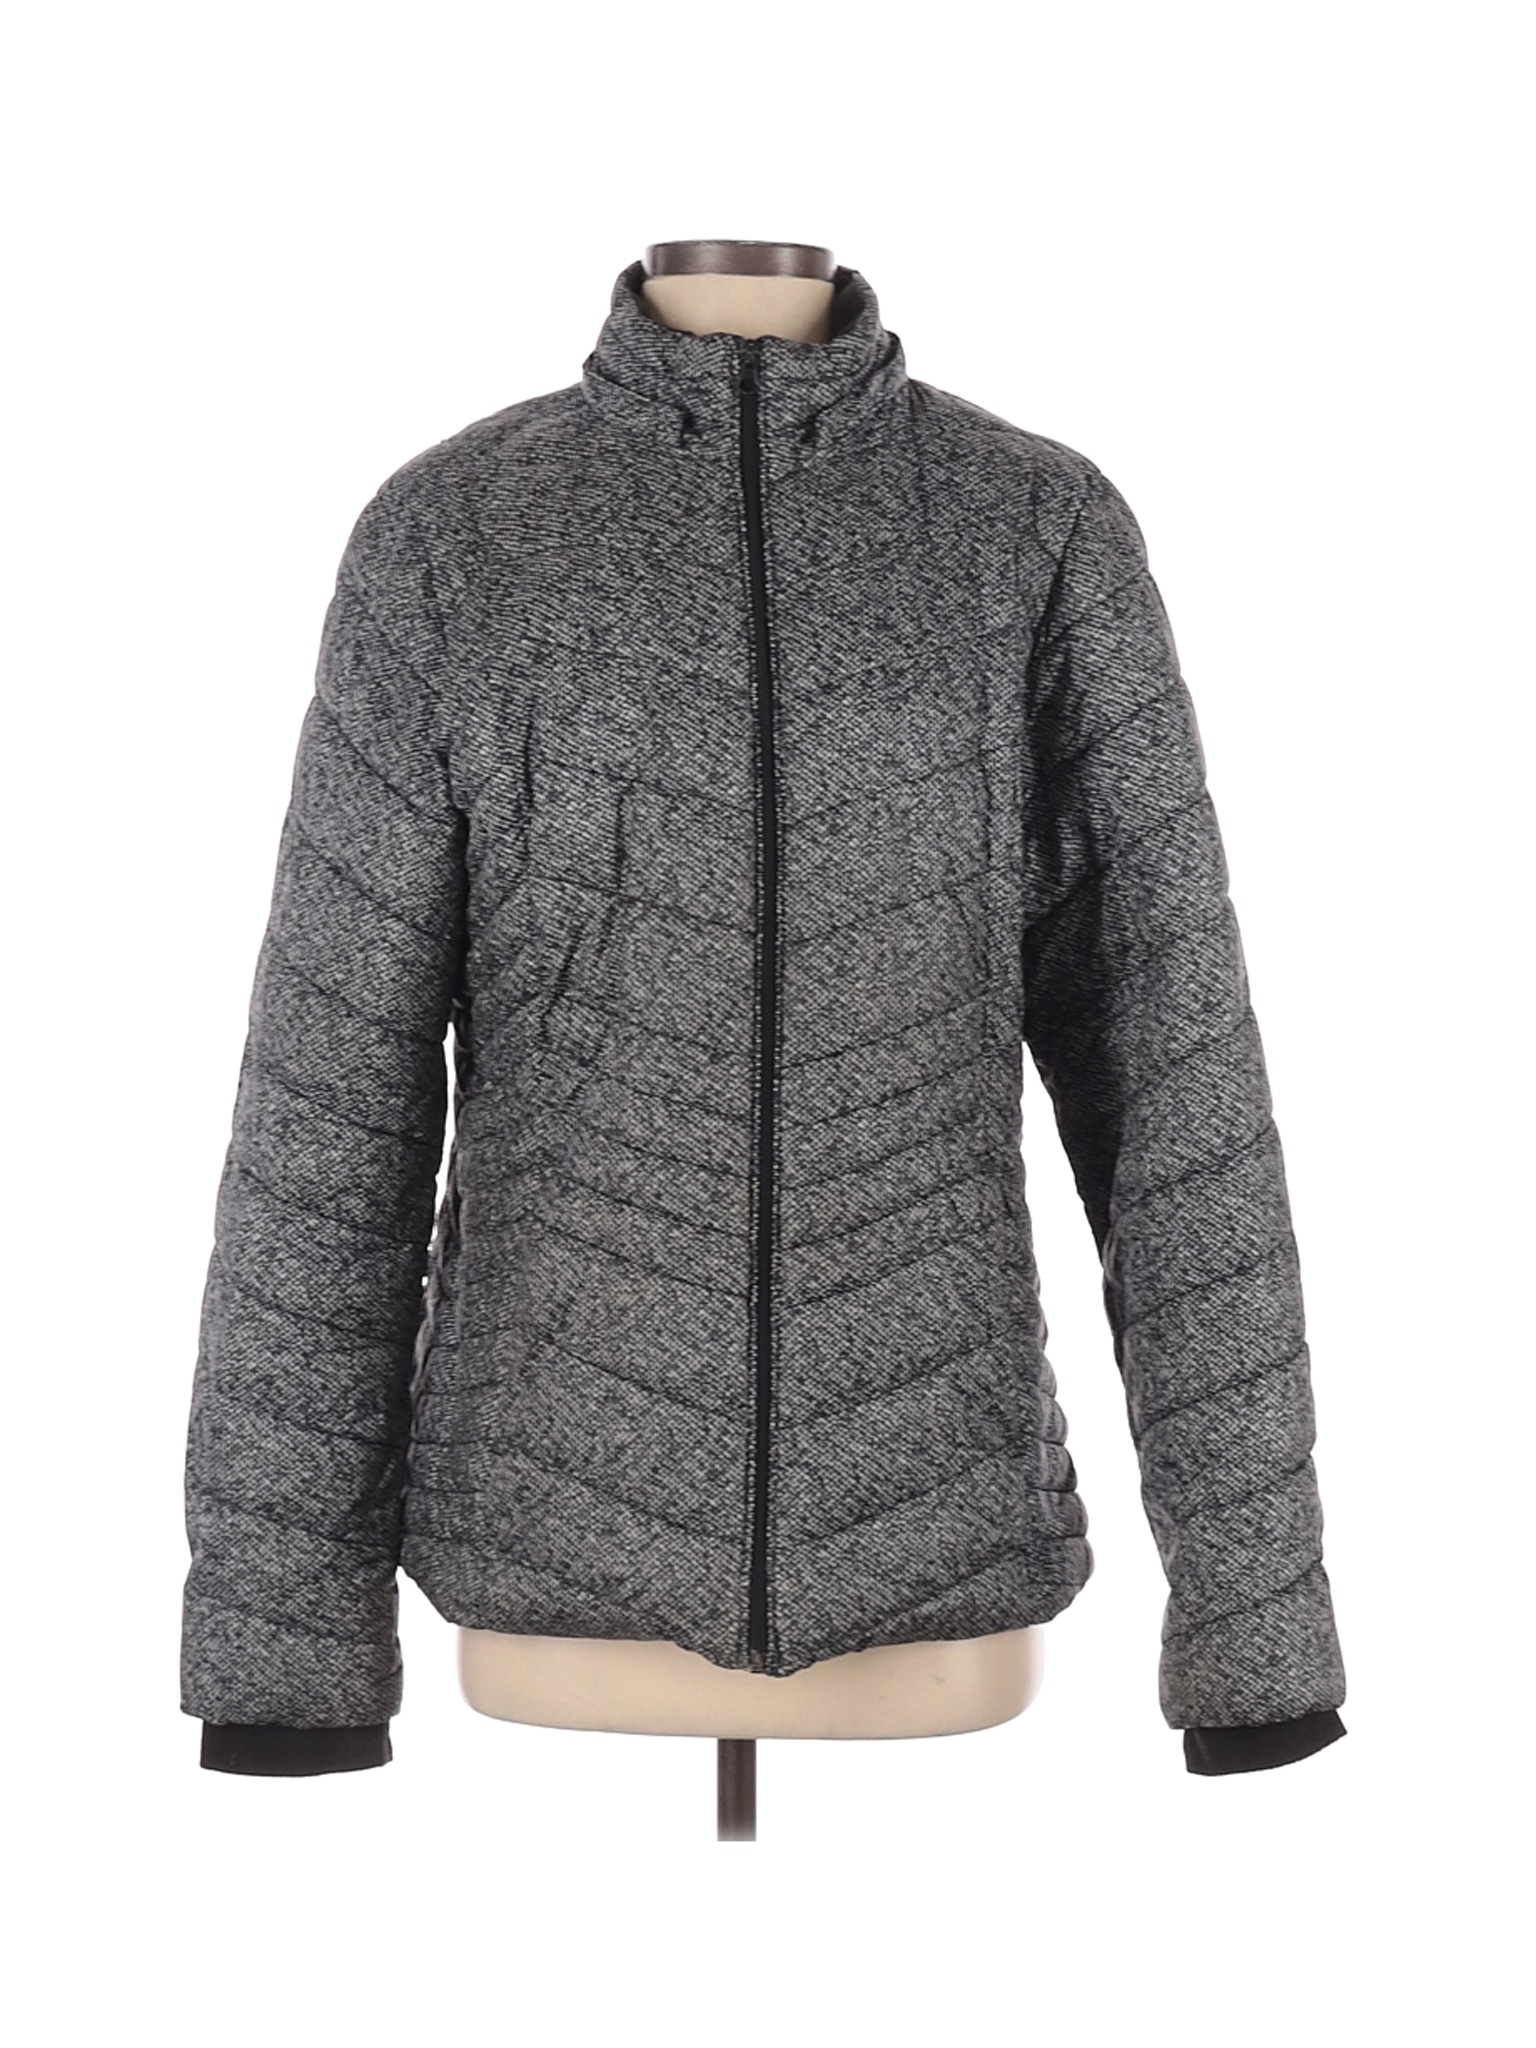 Xersion Women Gray Jacket M | eBay